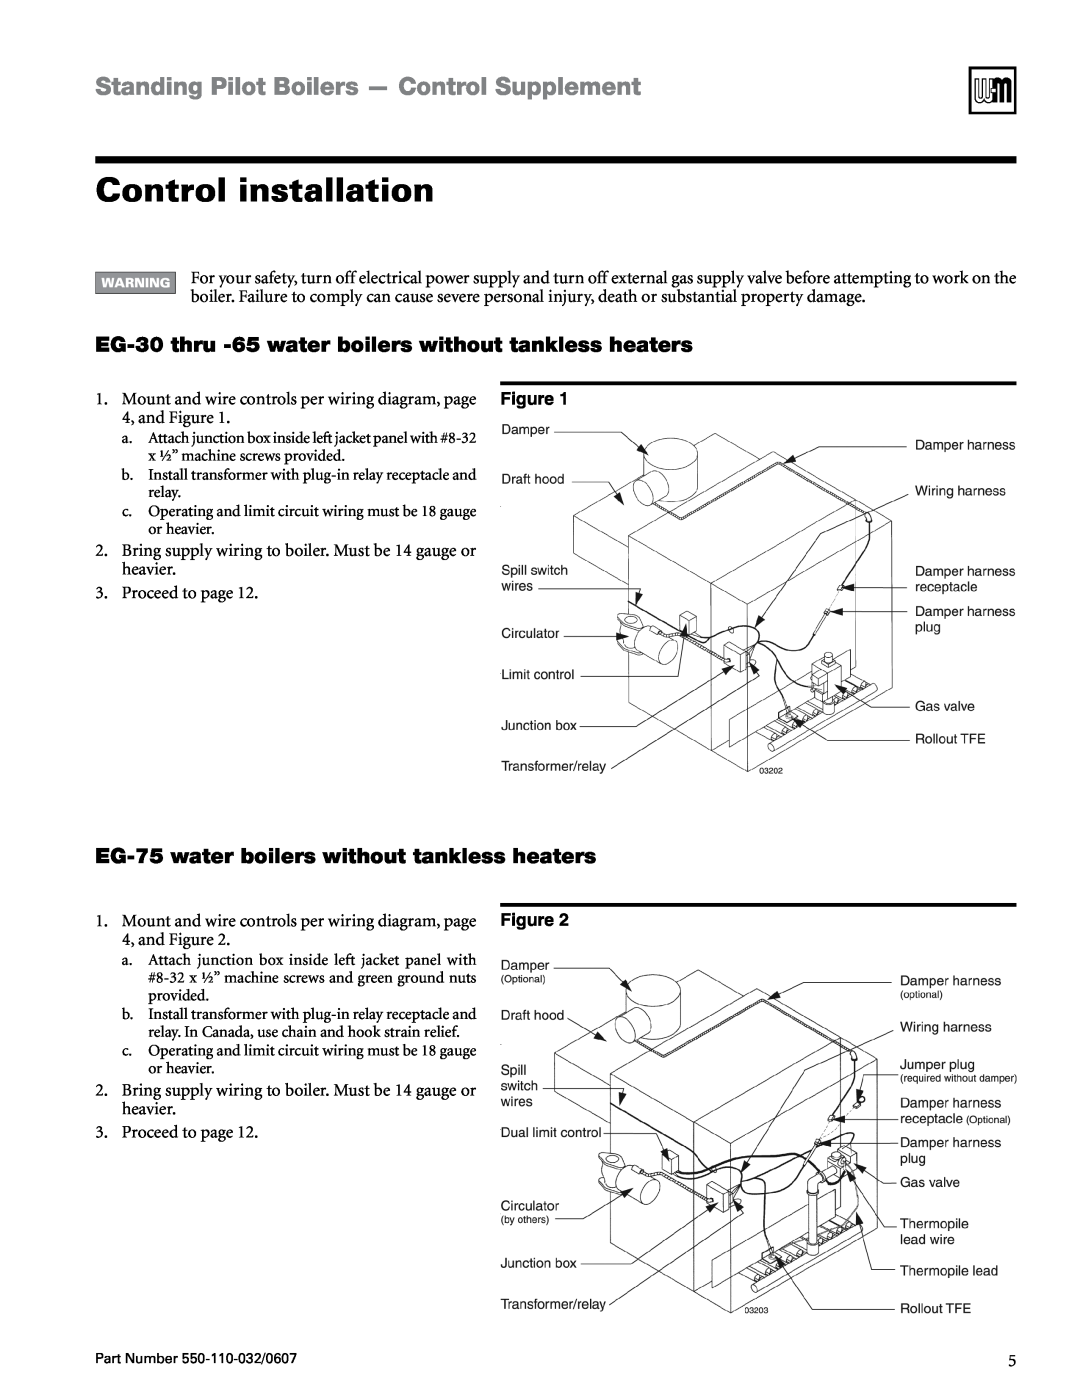 Weil-McLain EG-30 THRU -75, PEG-30 THRU -65 manual Control installation, EG-75water boilers without tankless heaters 